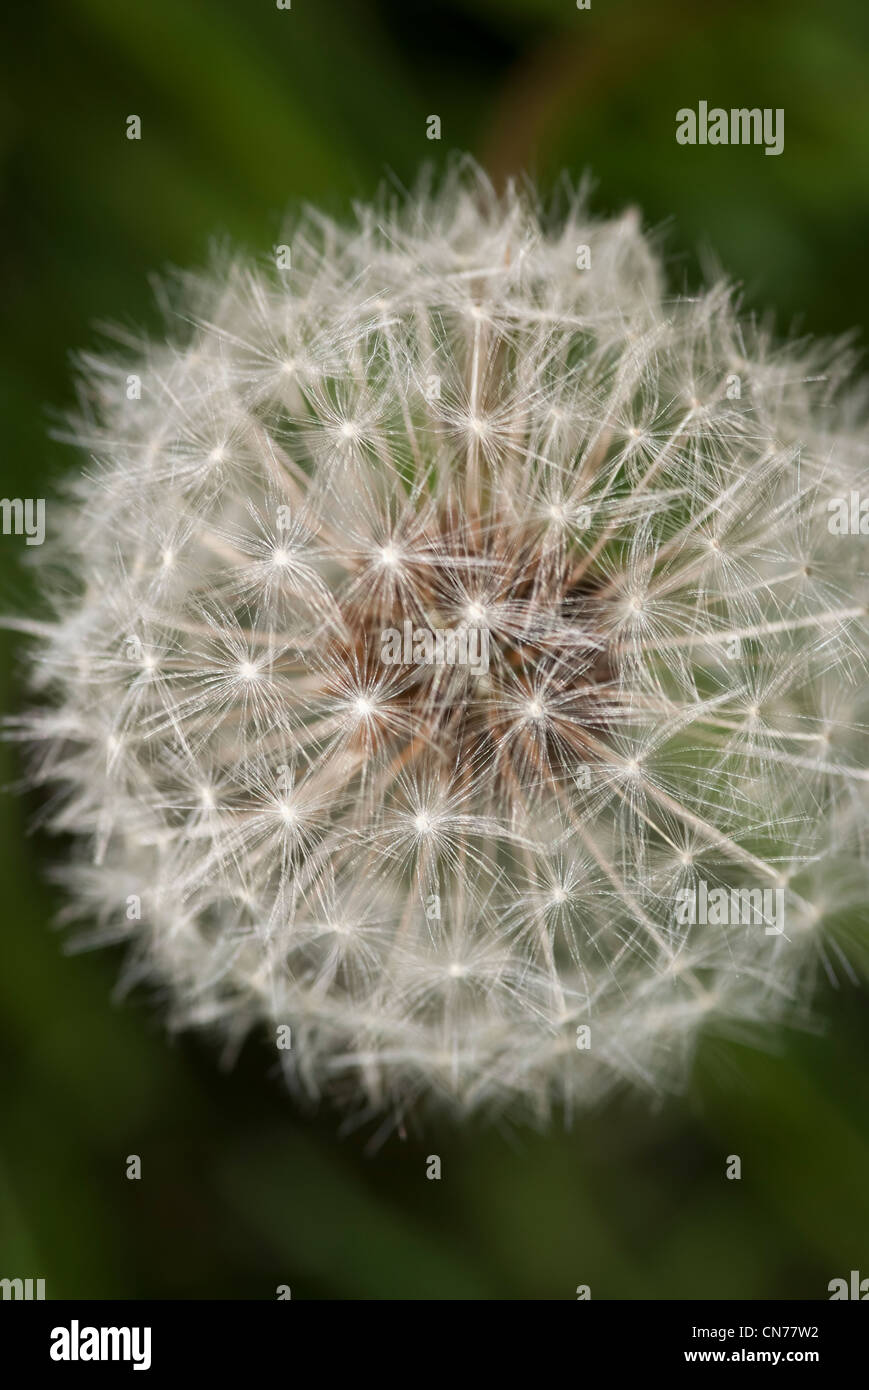 Macro, micro, close up photo, photograph of Dandelion seed head Stock Photo